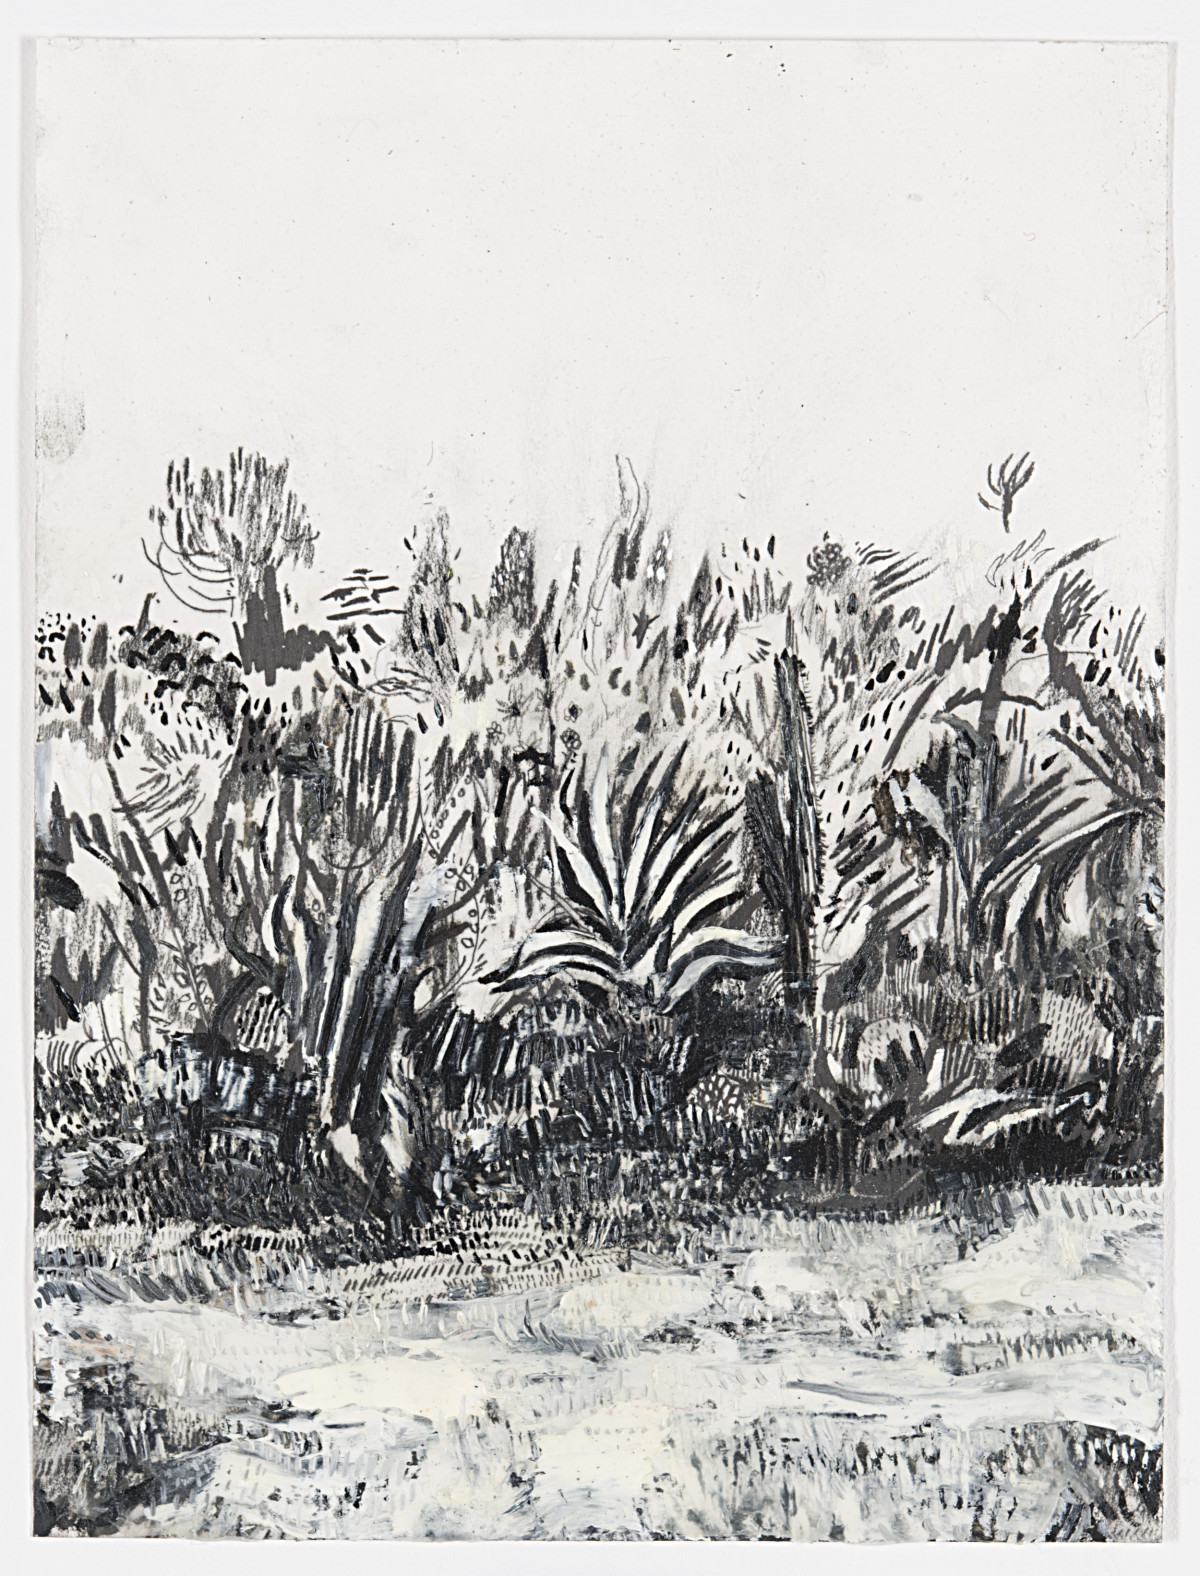 Raffi Kalenderian, ‘Cactus Garden’, 2015, Oil and graphite on paper